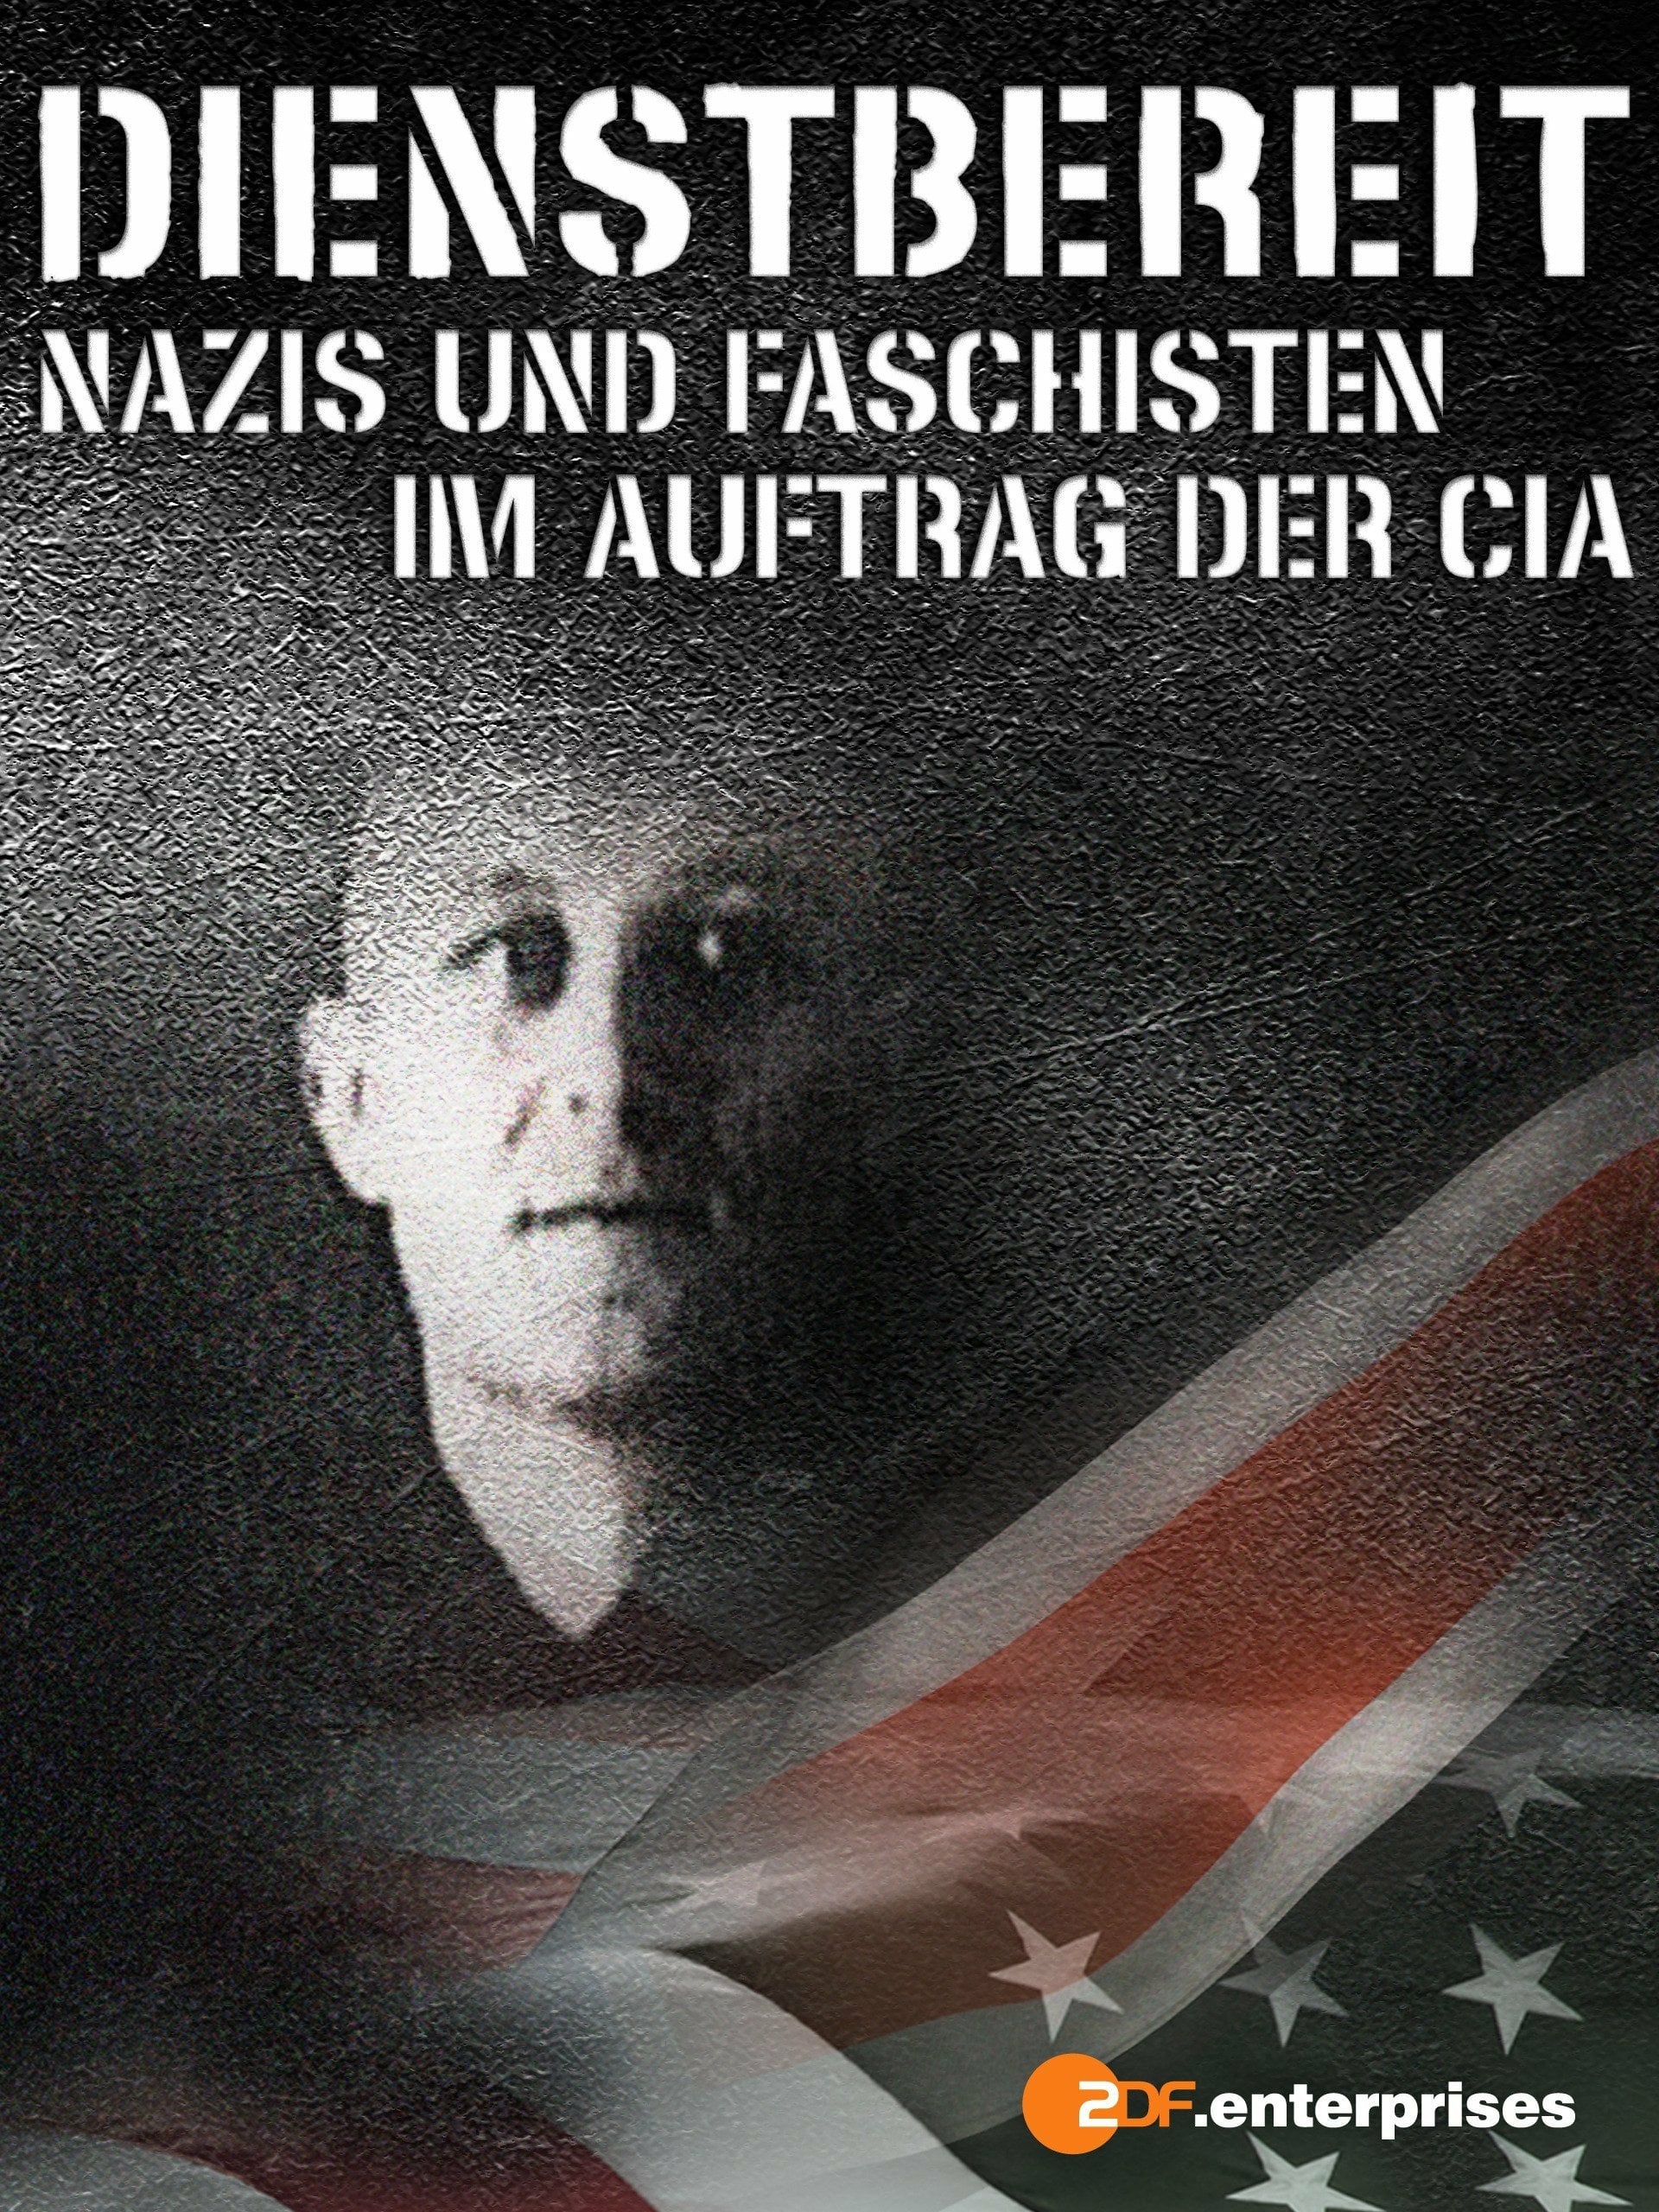 Aptes au service - les recrues fascistes et nazies de la CIA